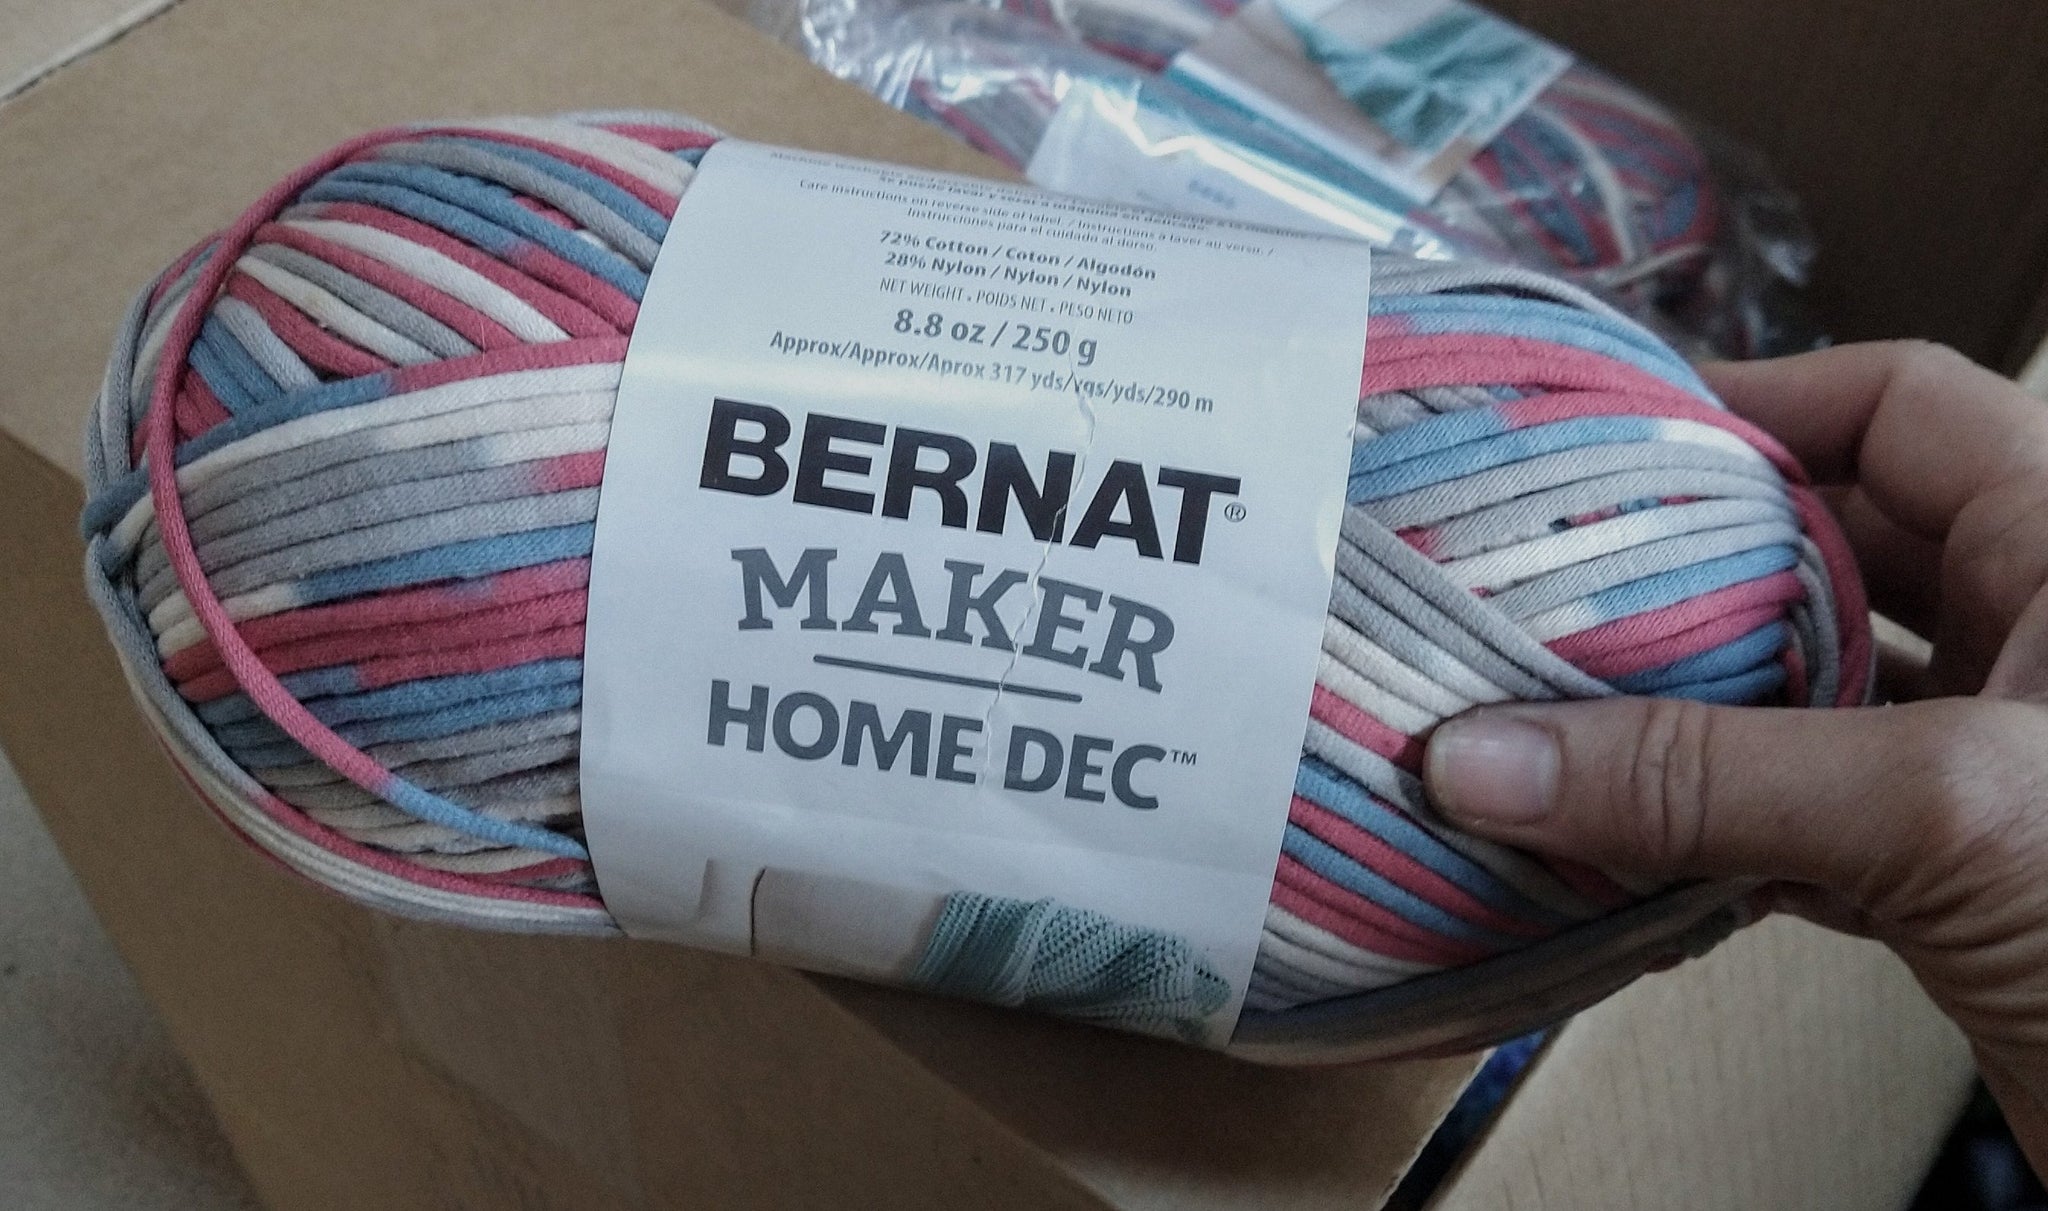 Bernat Maker Home Dec Yarn 